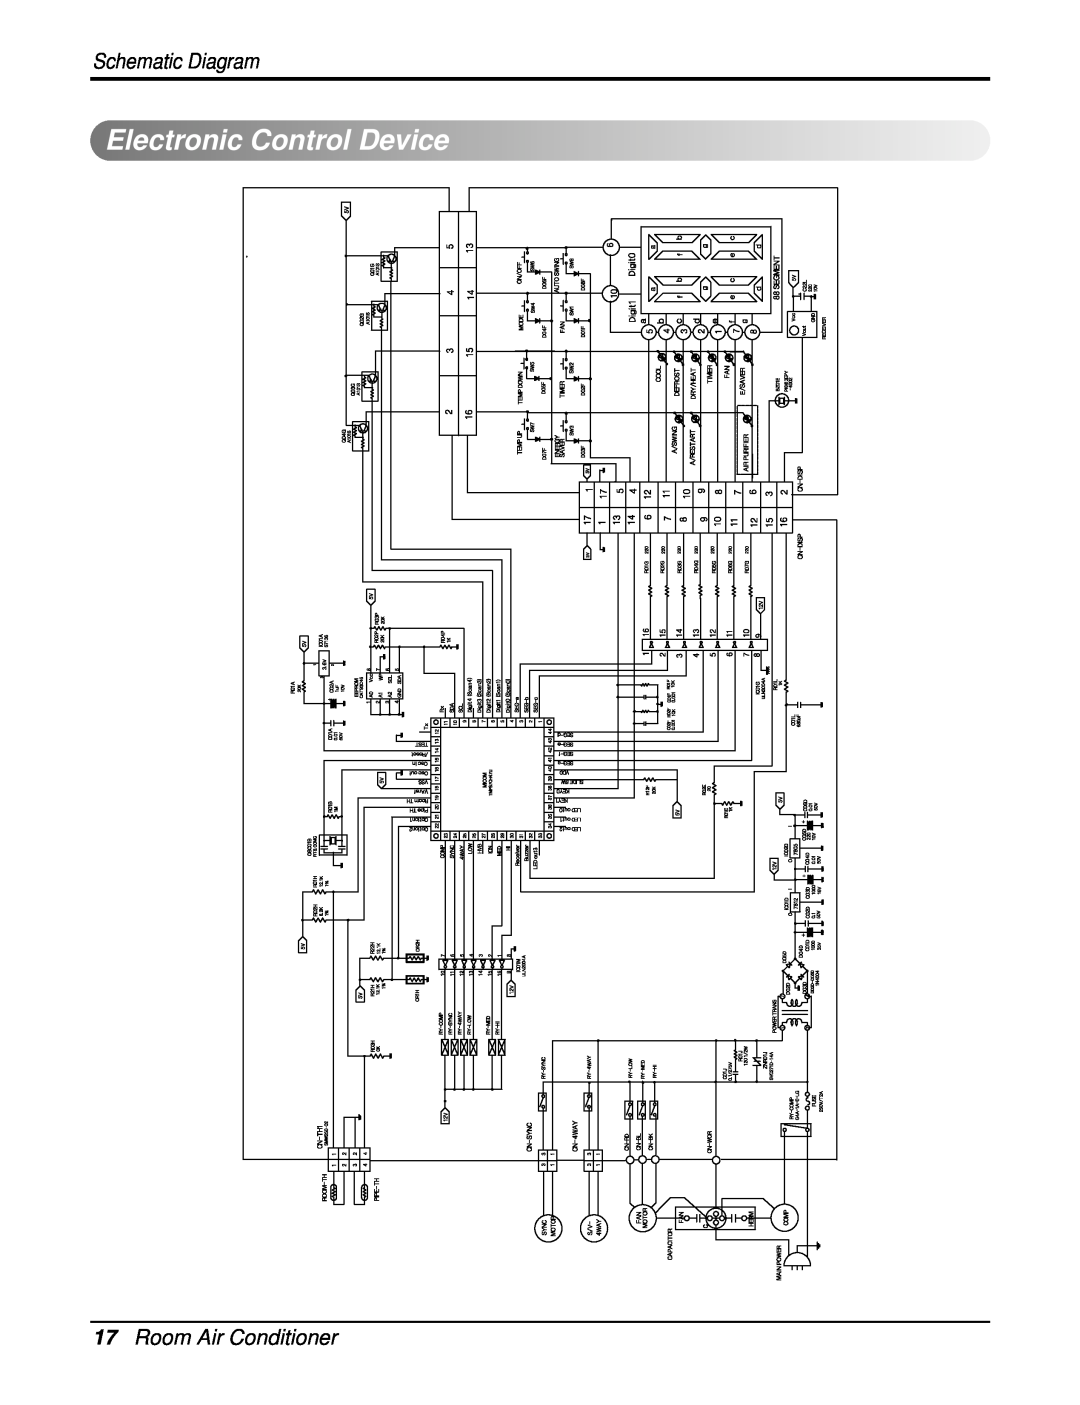 Friedrich CP06E10, CP08E10 manual ElectronicControl Device, 17Room Air Conditioner, Schematic Diagram 